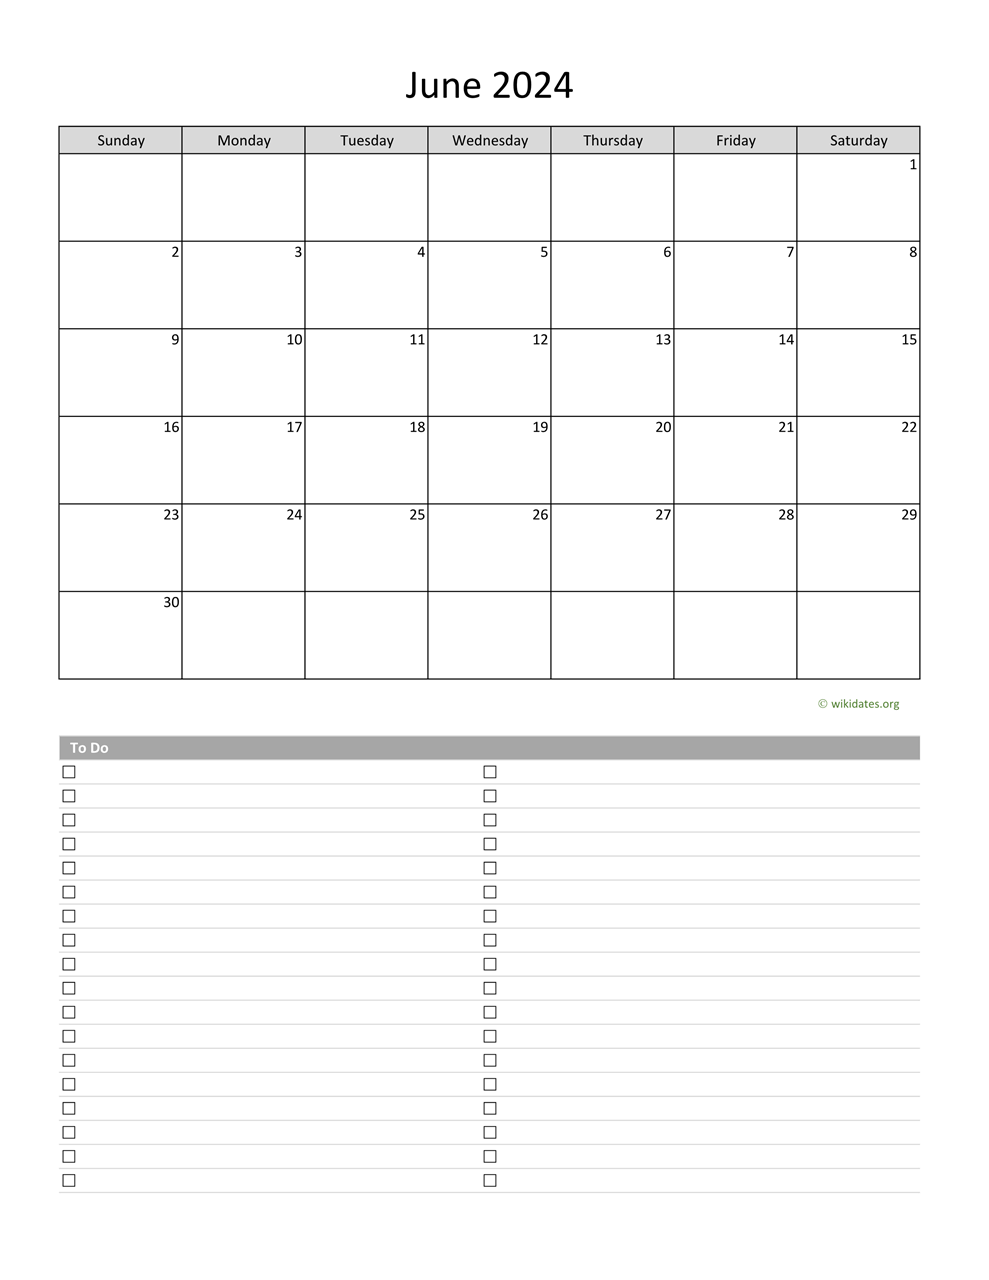 June 2024 Calendar with ToDo List